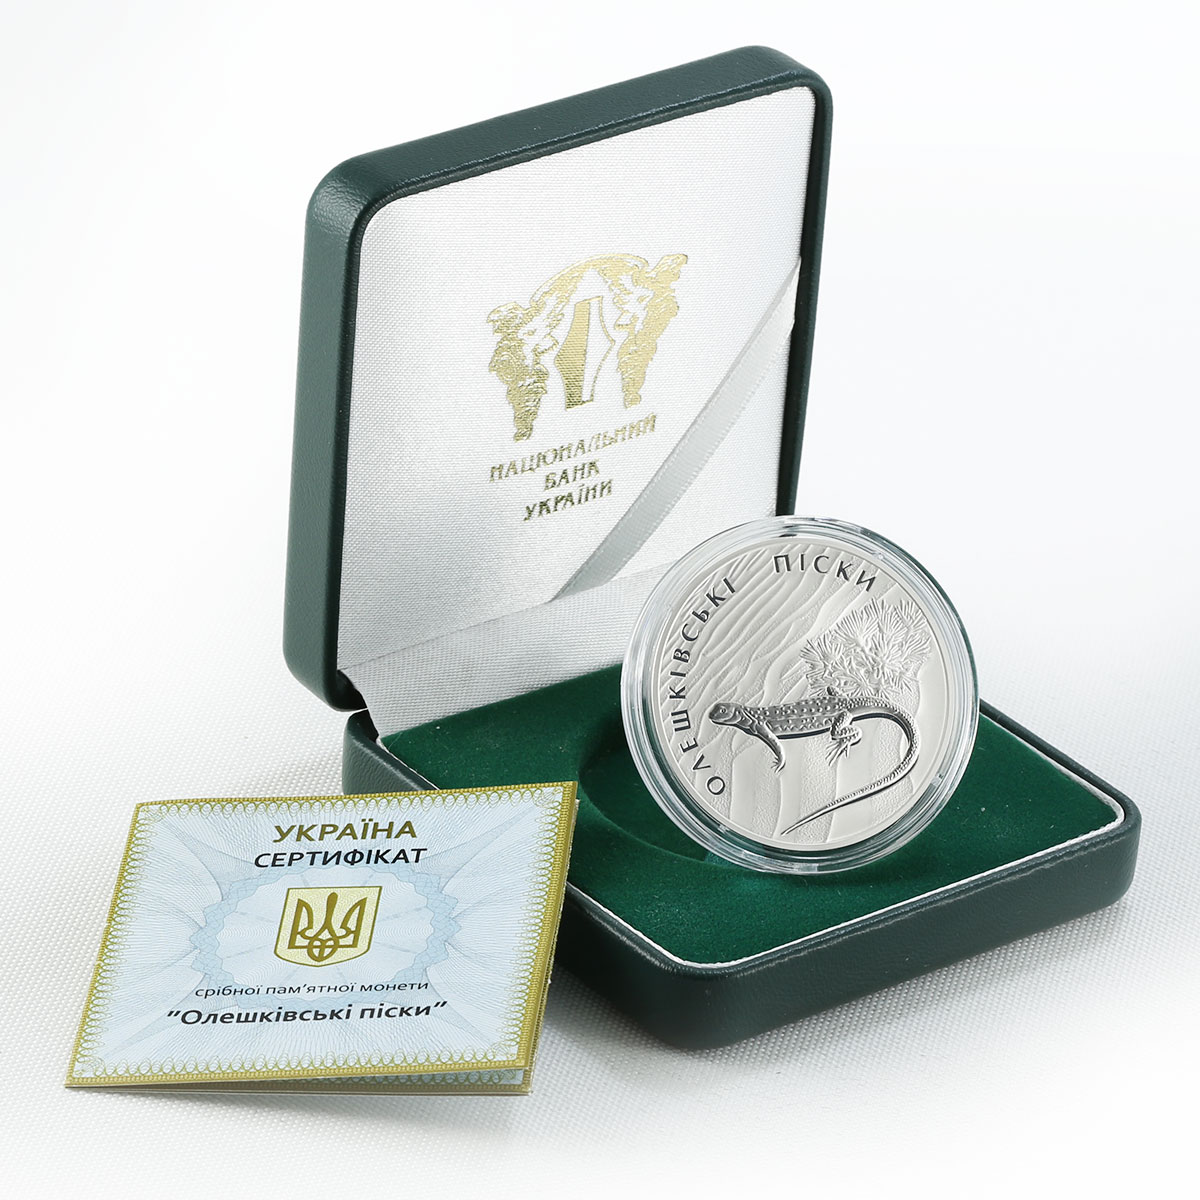 Ukraine 10 hryvnia Oleshky Sands Lizard Fauna Desert silver proof coin 2015